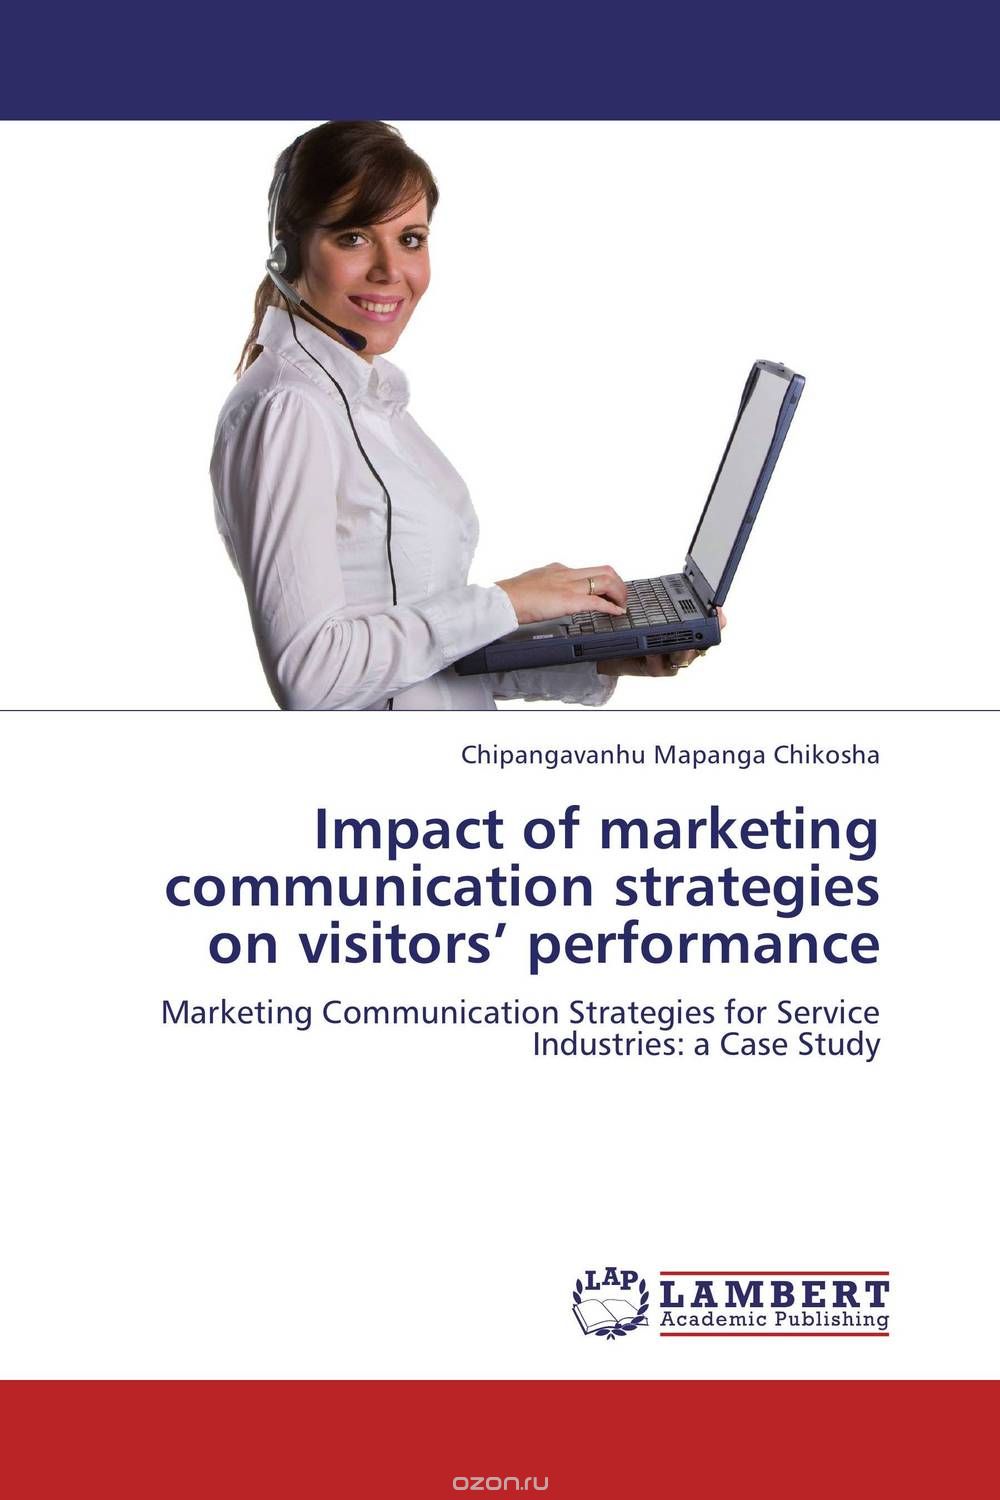 Скачать книгу "Impact of marketing communication strategies on visitors’ performance"